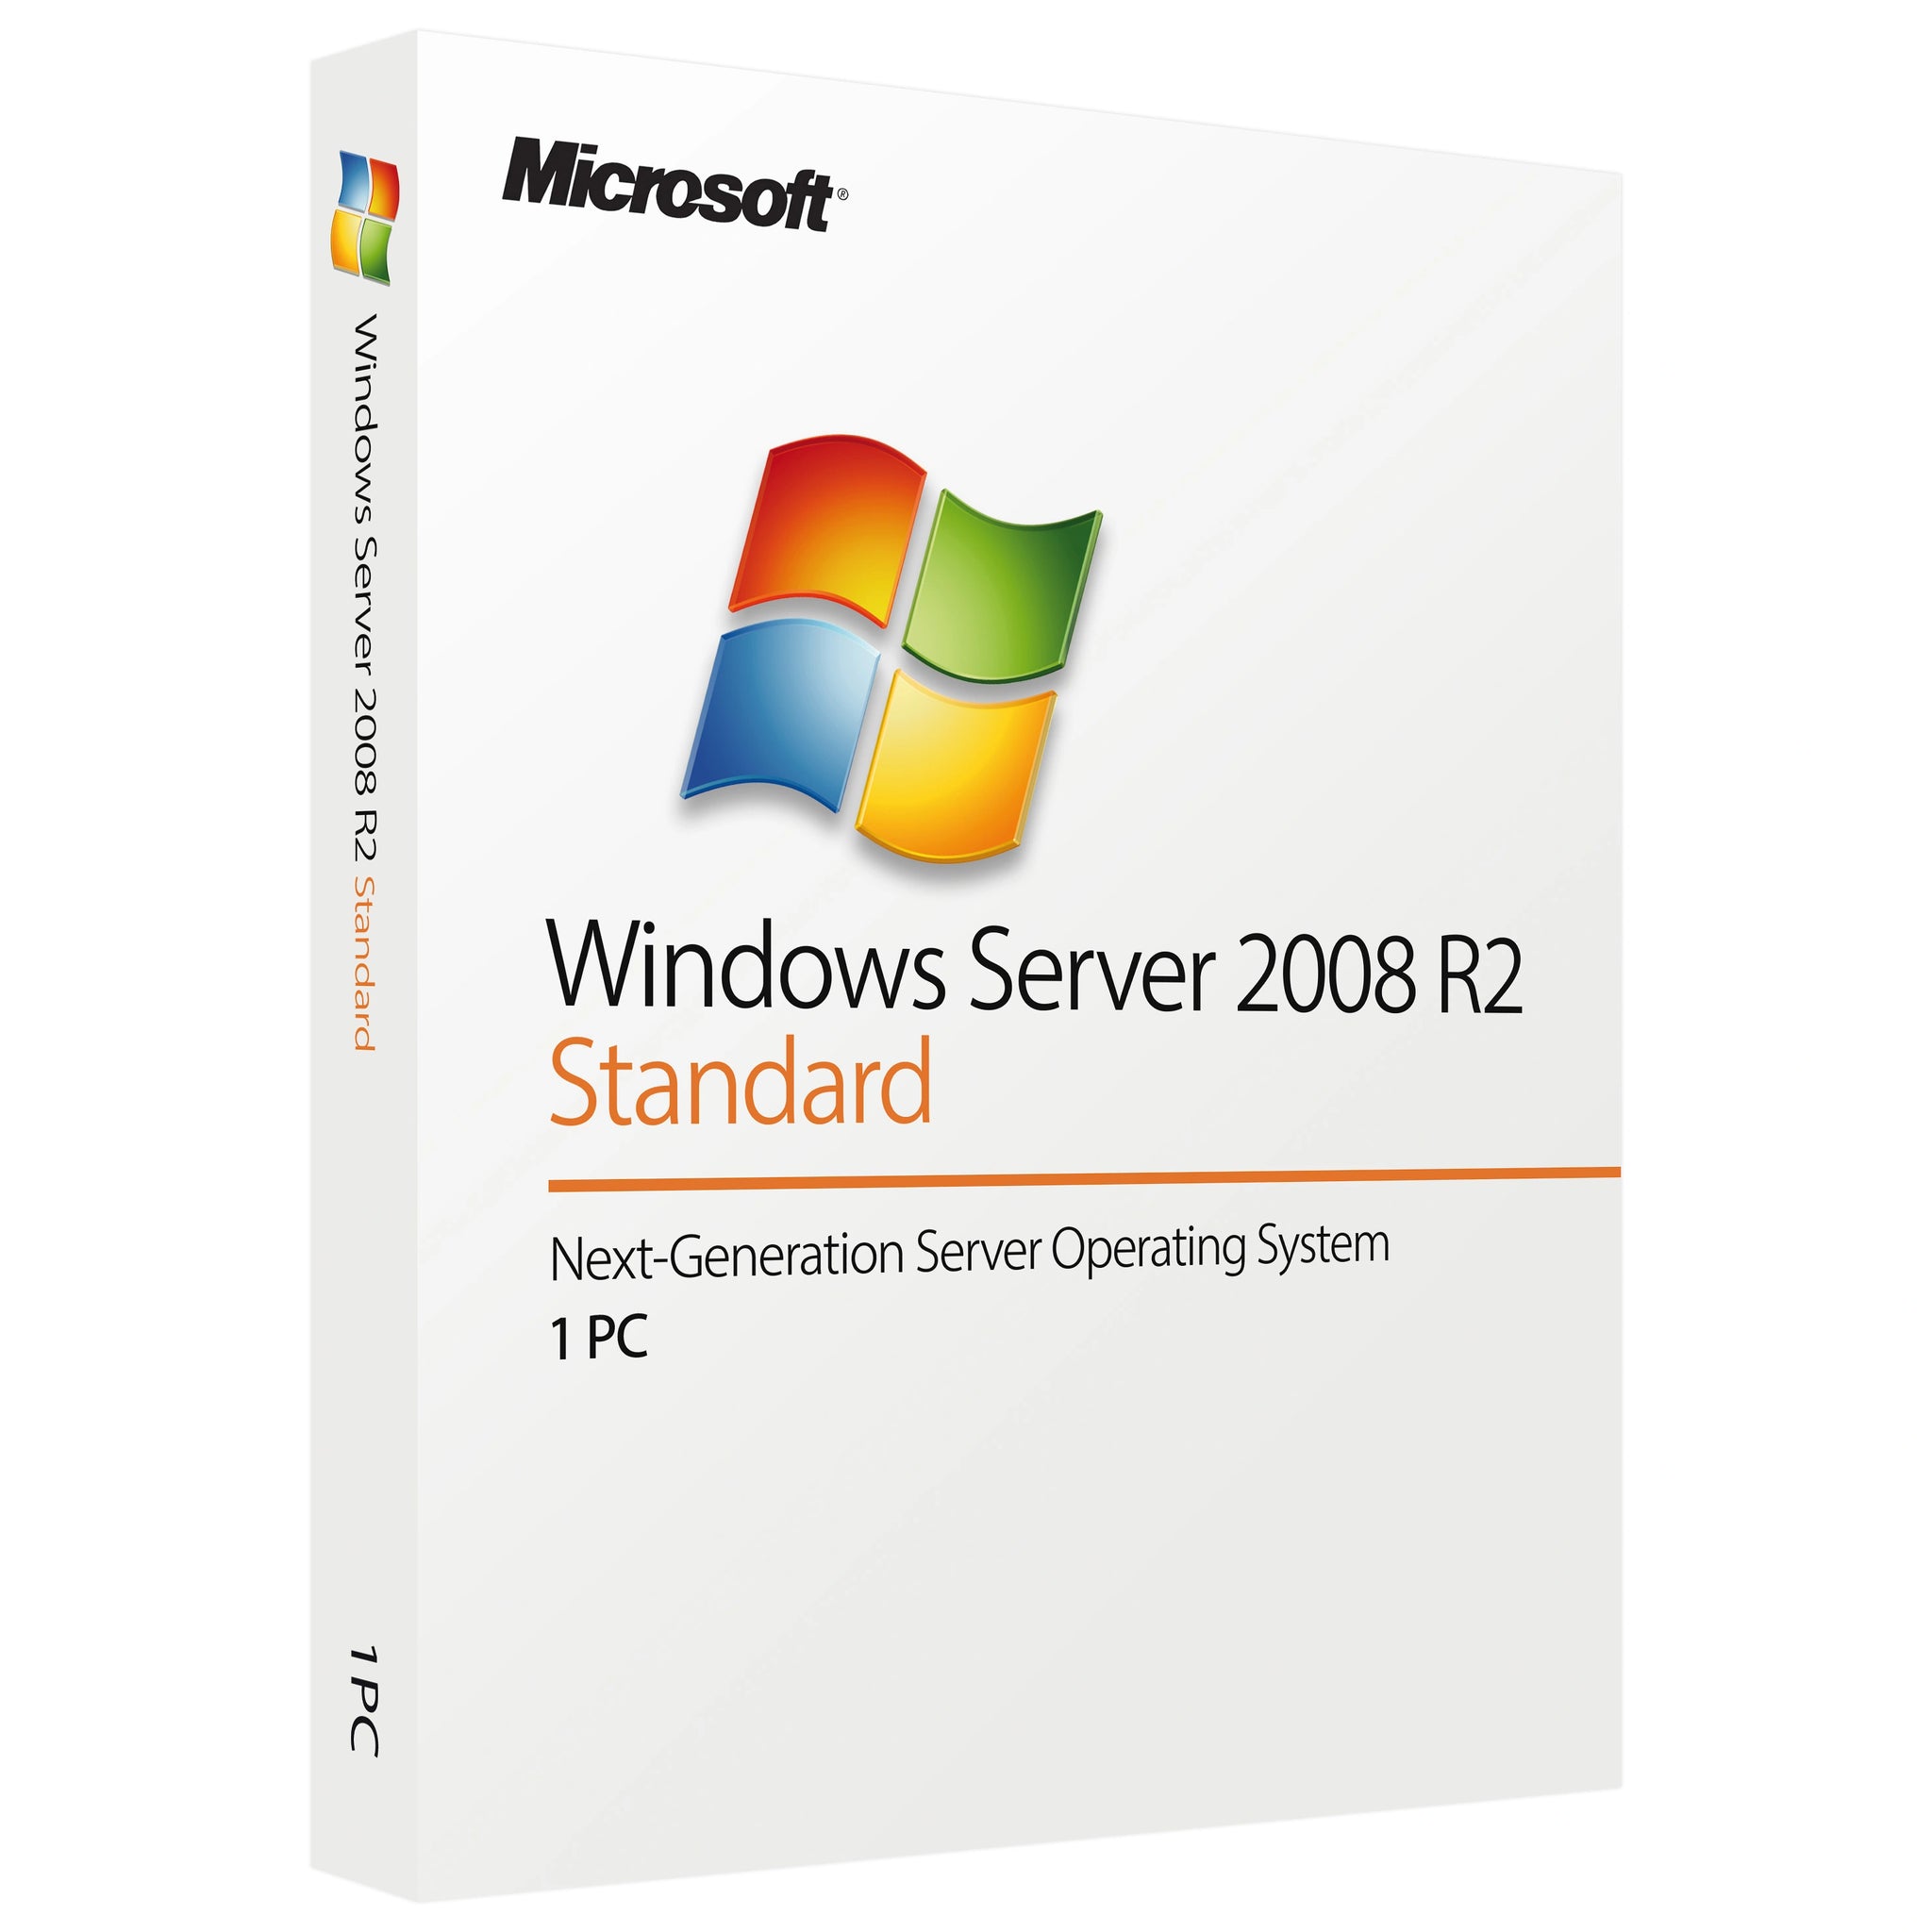 Microsoft Windows Server 2008 Standard - Lifetime License Key For 1 PC